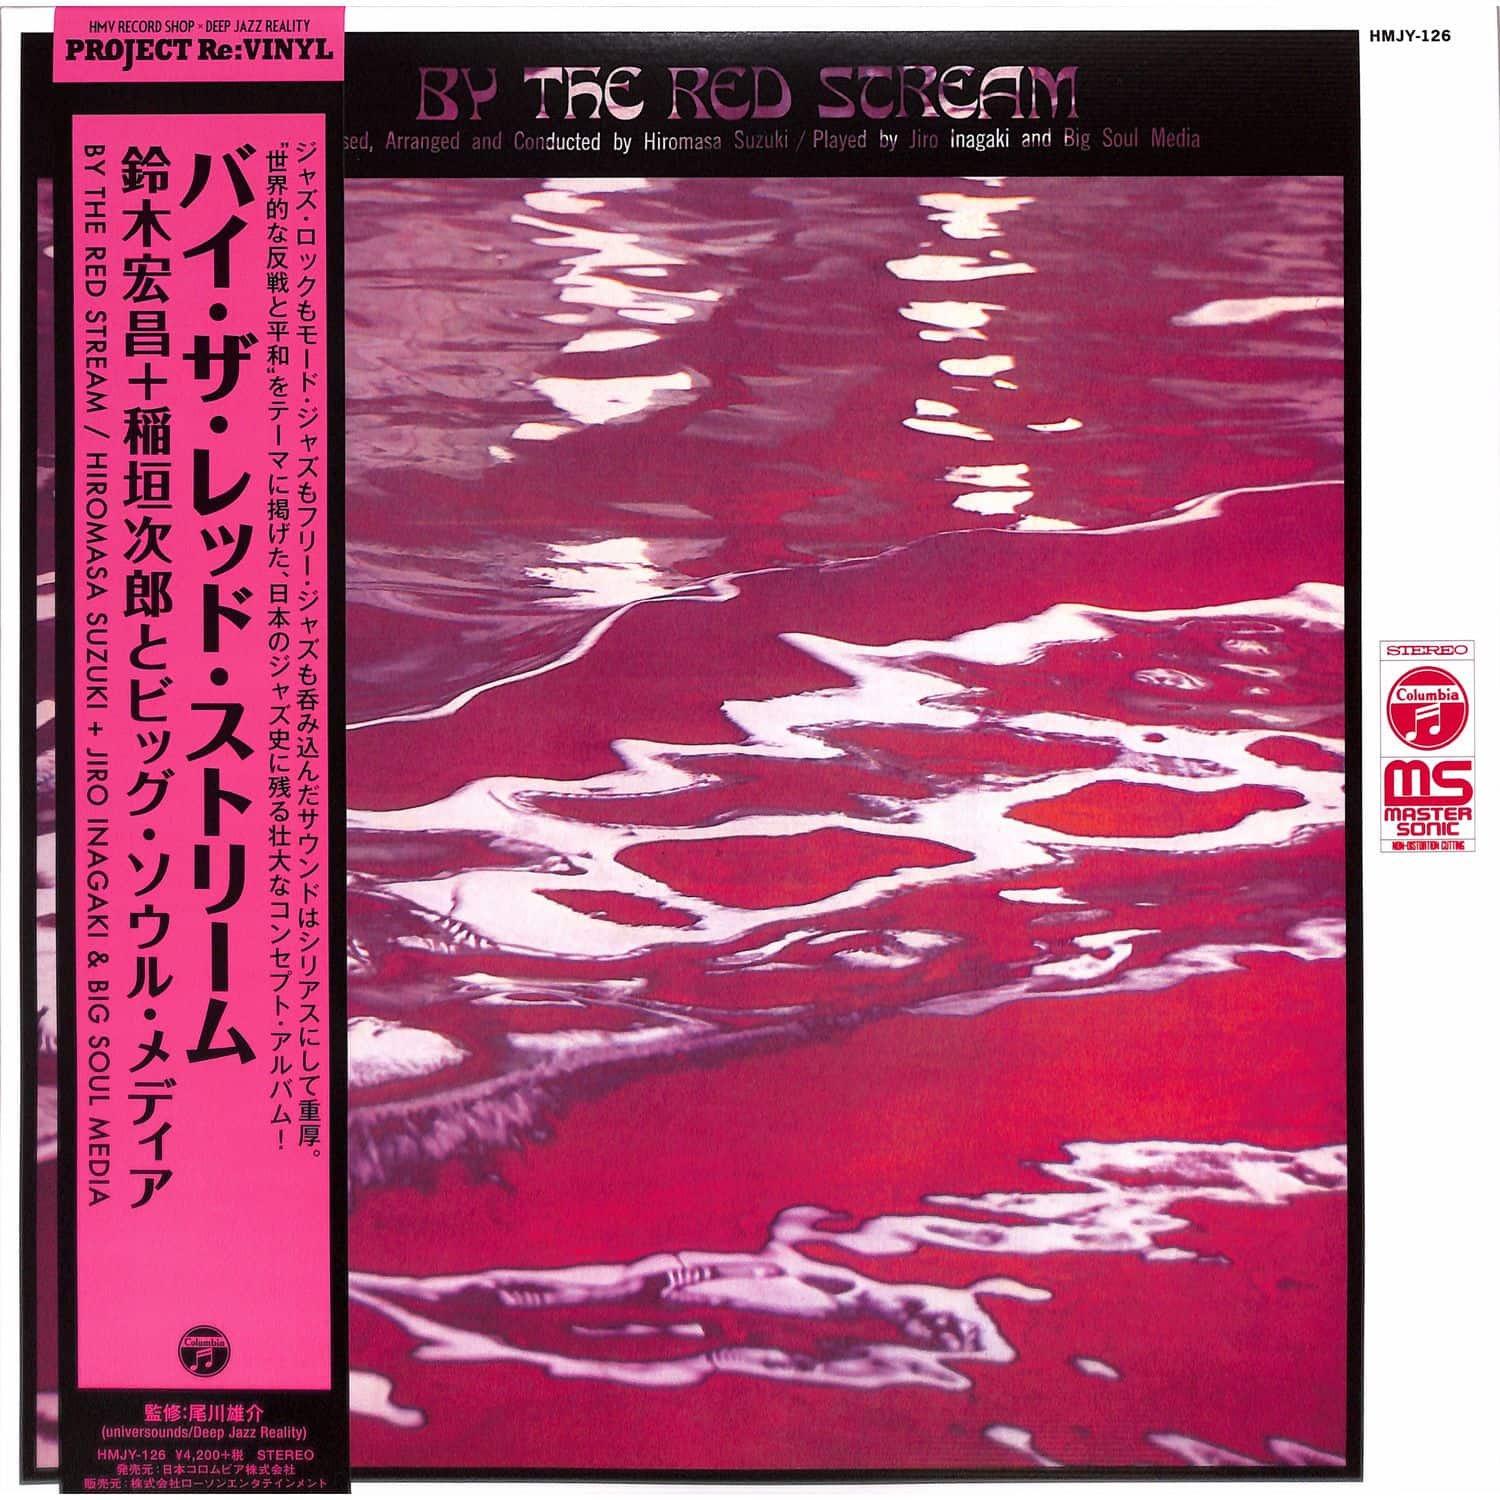 Hiromasa Suzuki + Jiro Inagaki and Big Soul Media - BY THE RED STREAM 